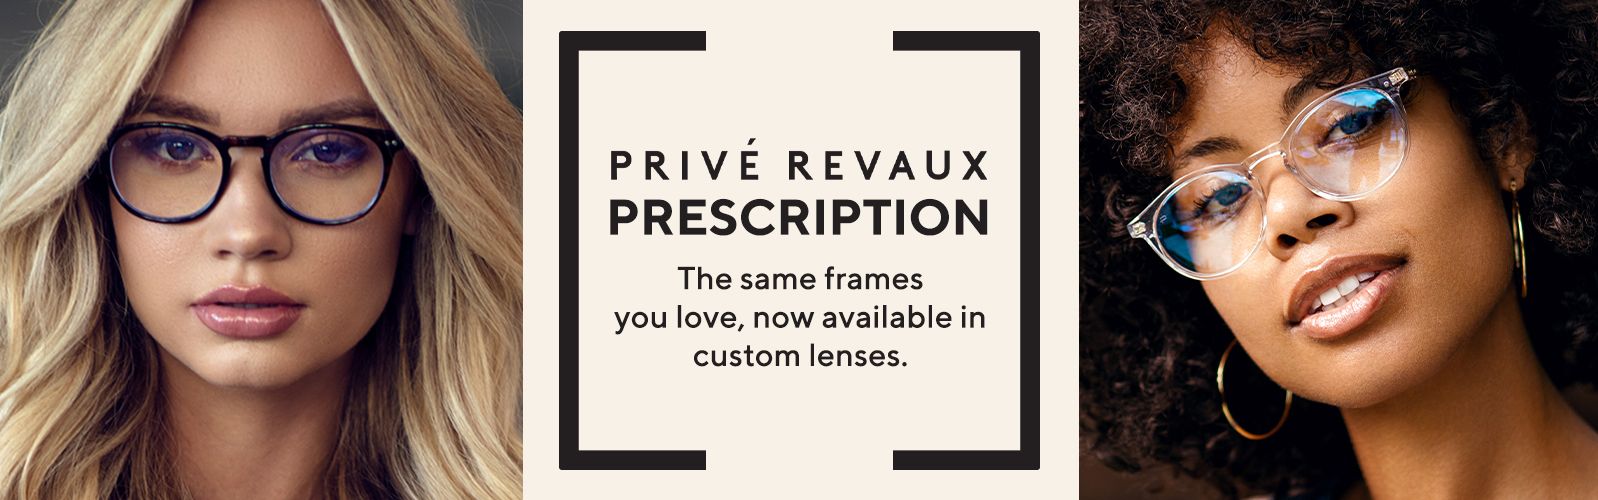 Privé Revaux Prescription - The same frames you love, now available in custom lenses.